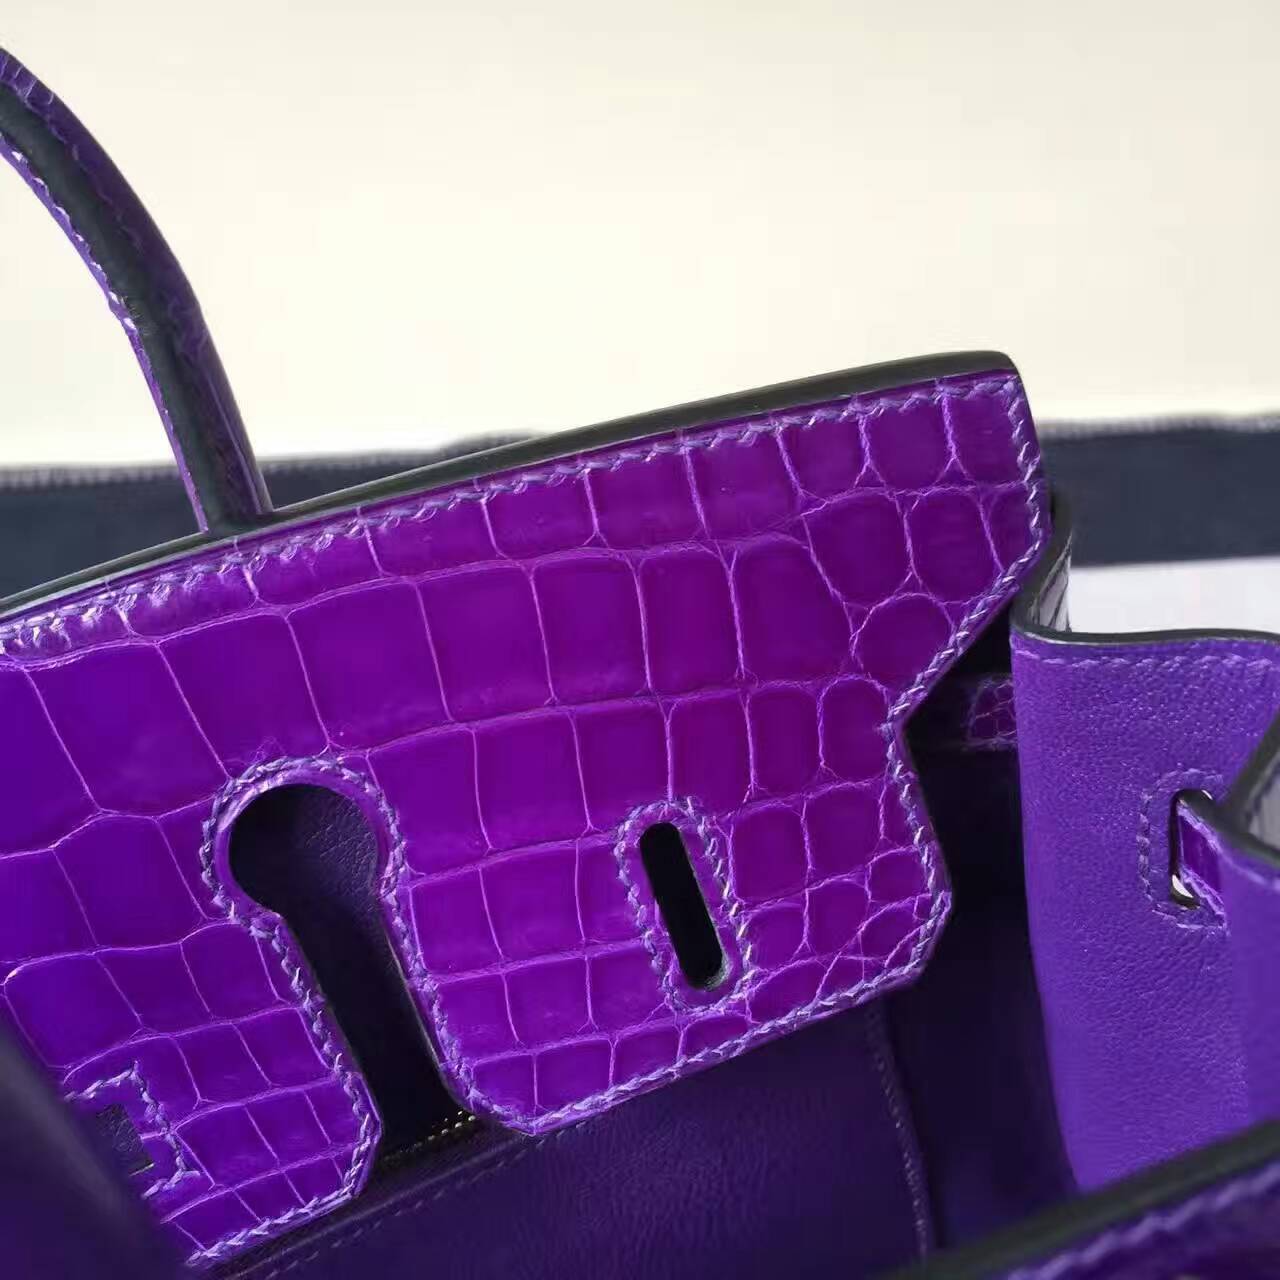 New Arrival Hermes Crocodile Shiny Leather Birkin Bag 25cm in 5L Ultraviolet